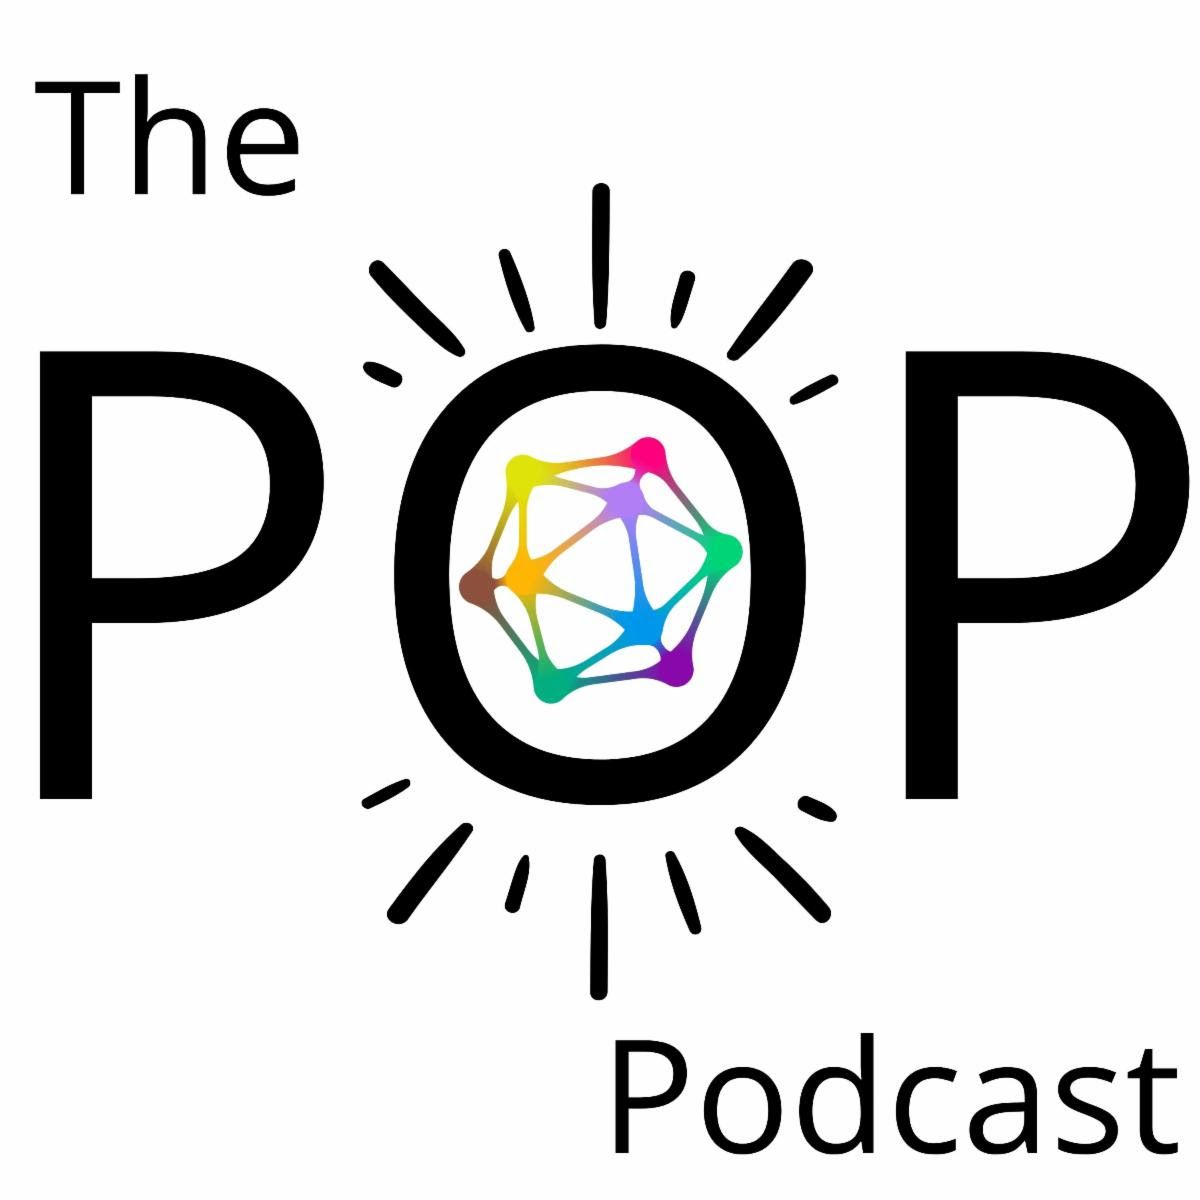 Power of partnership podcast logo.